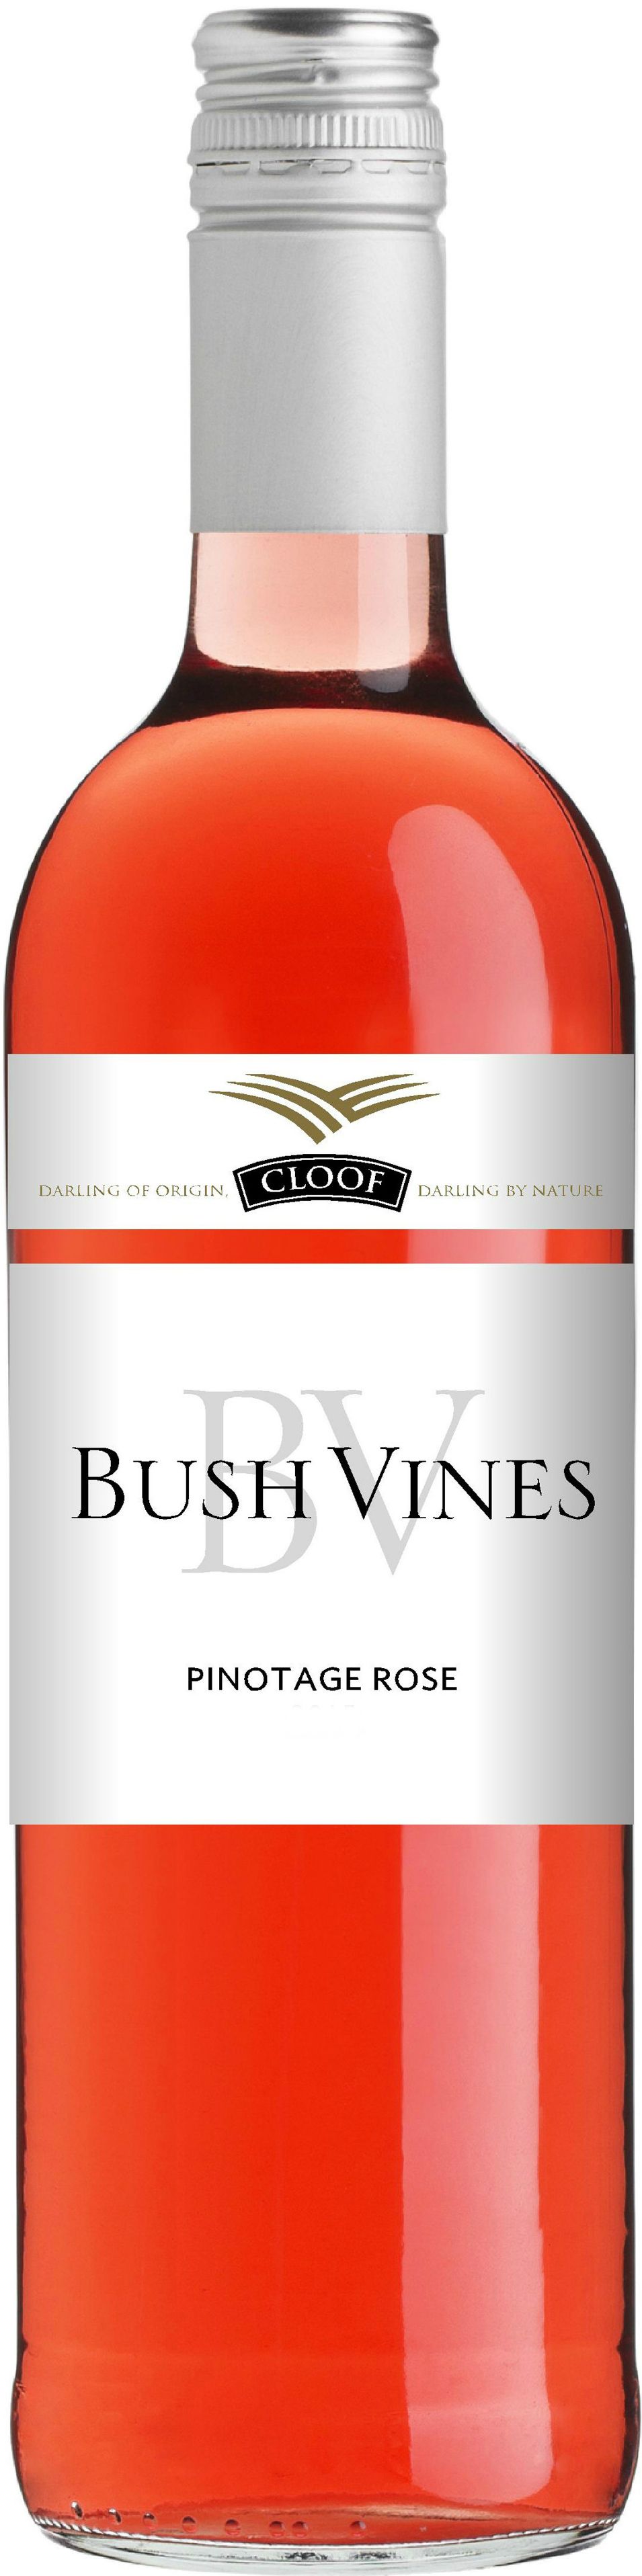 Cloof, Bush Vines Pinotage Rose, 2016